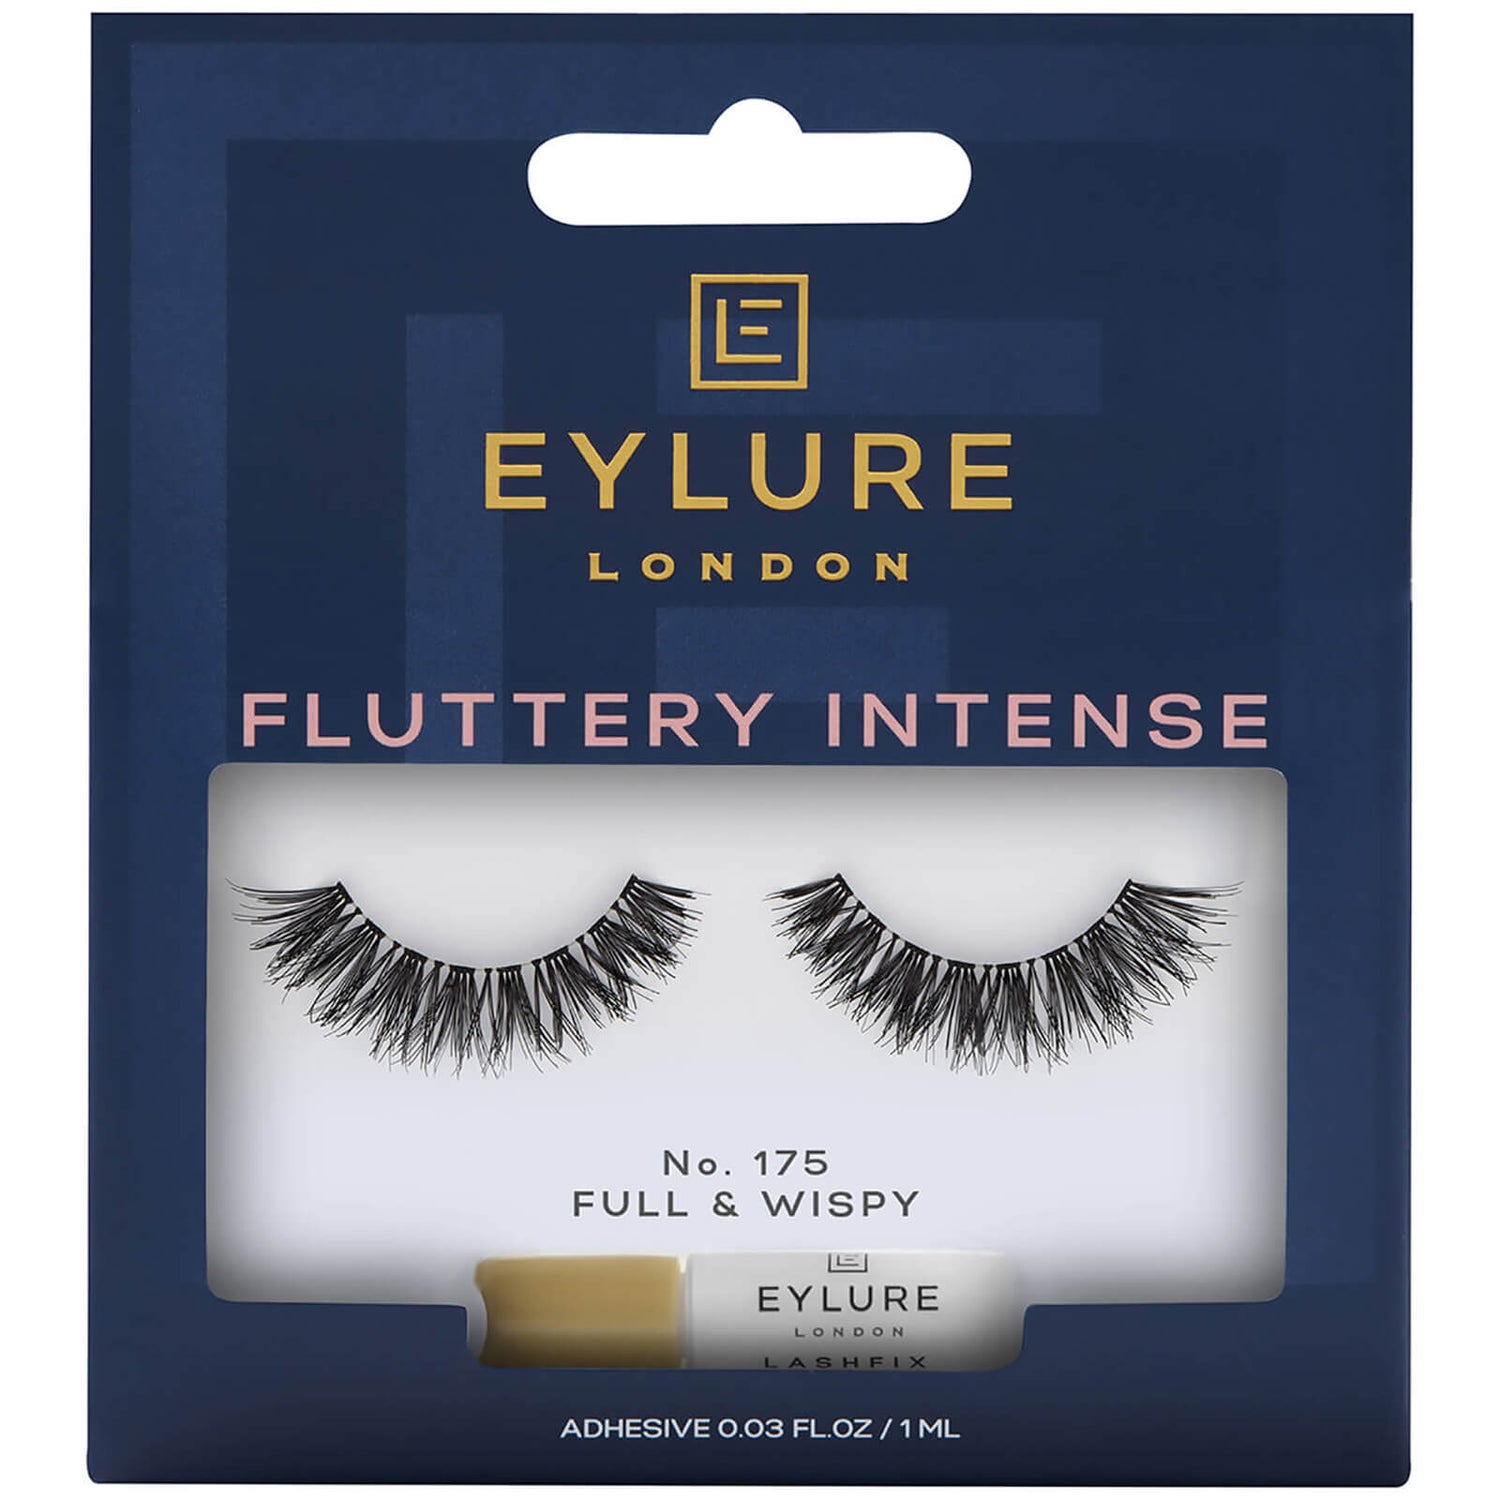 Eylure Fluttery Intense 175 Lashes